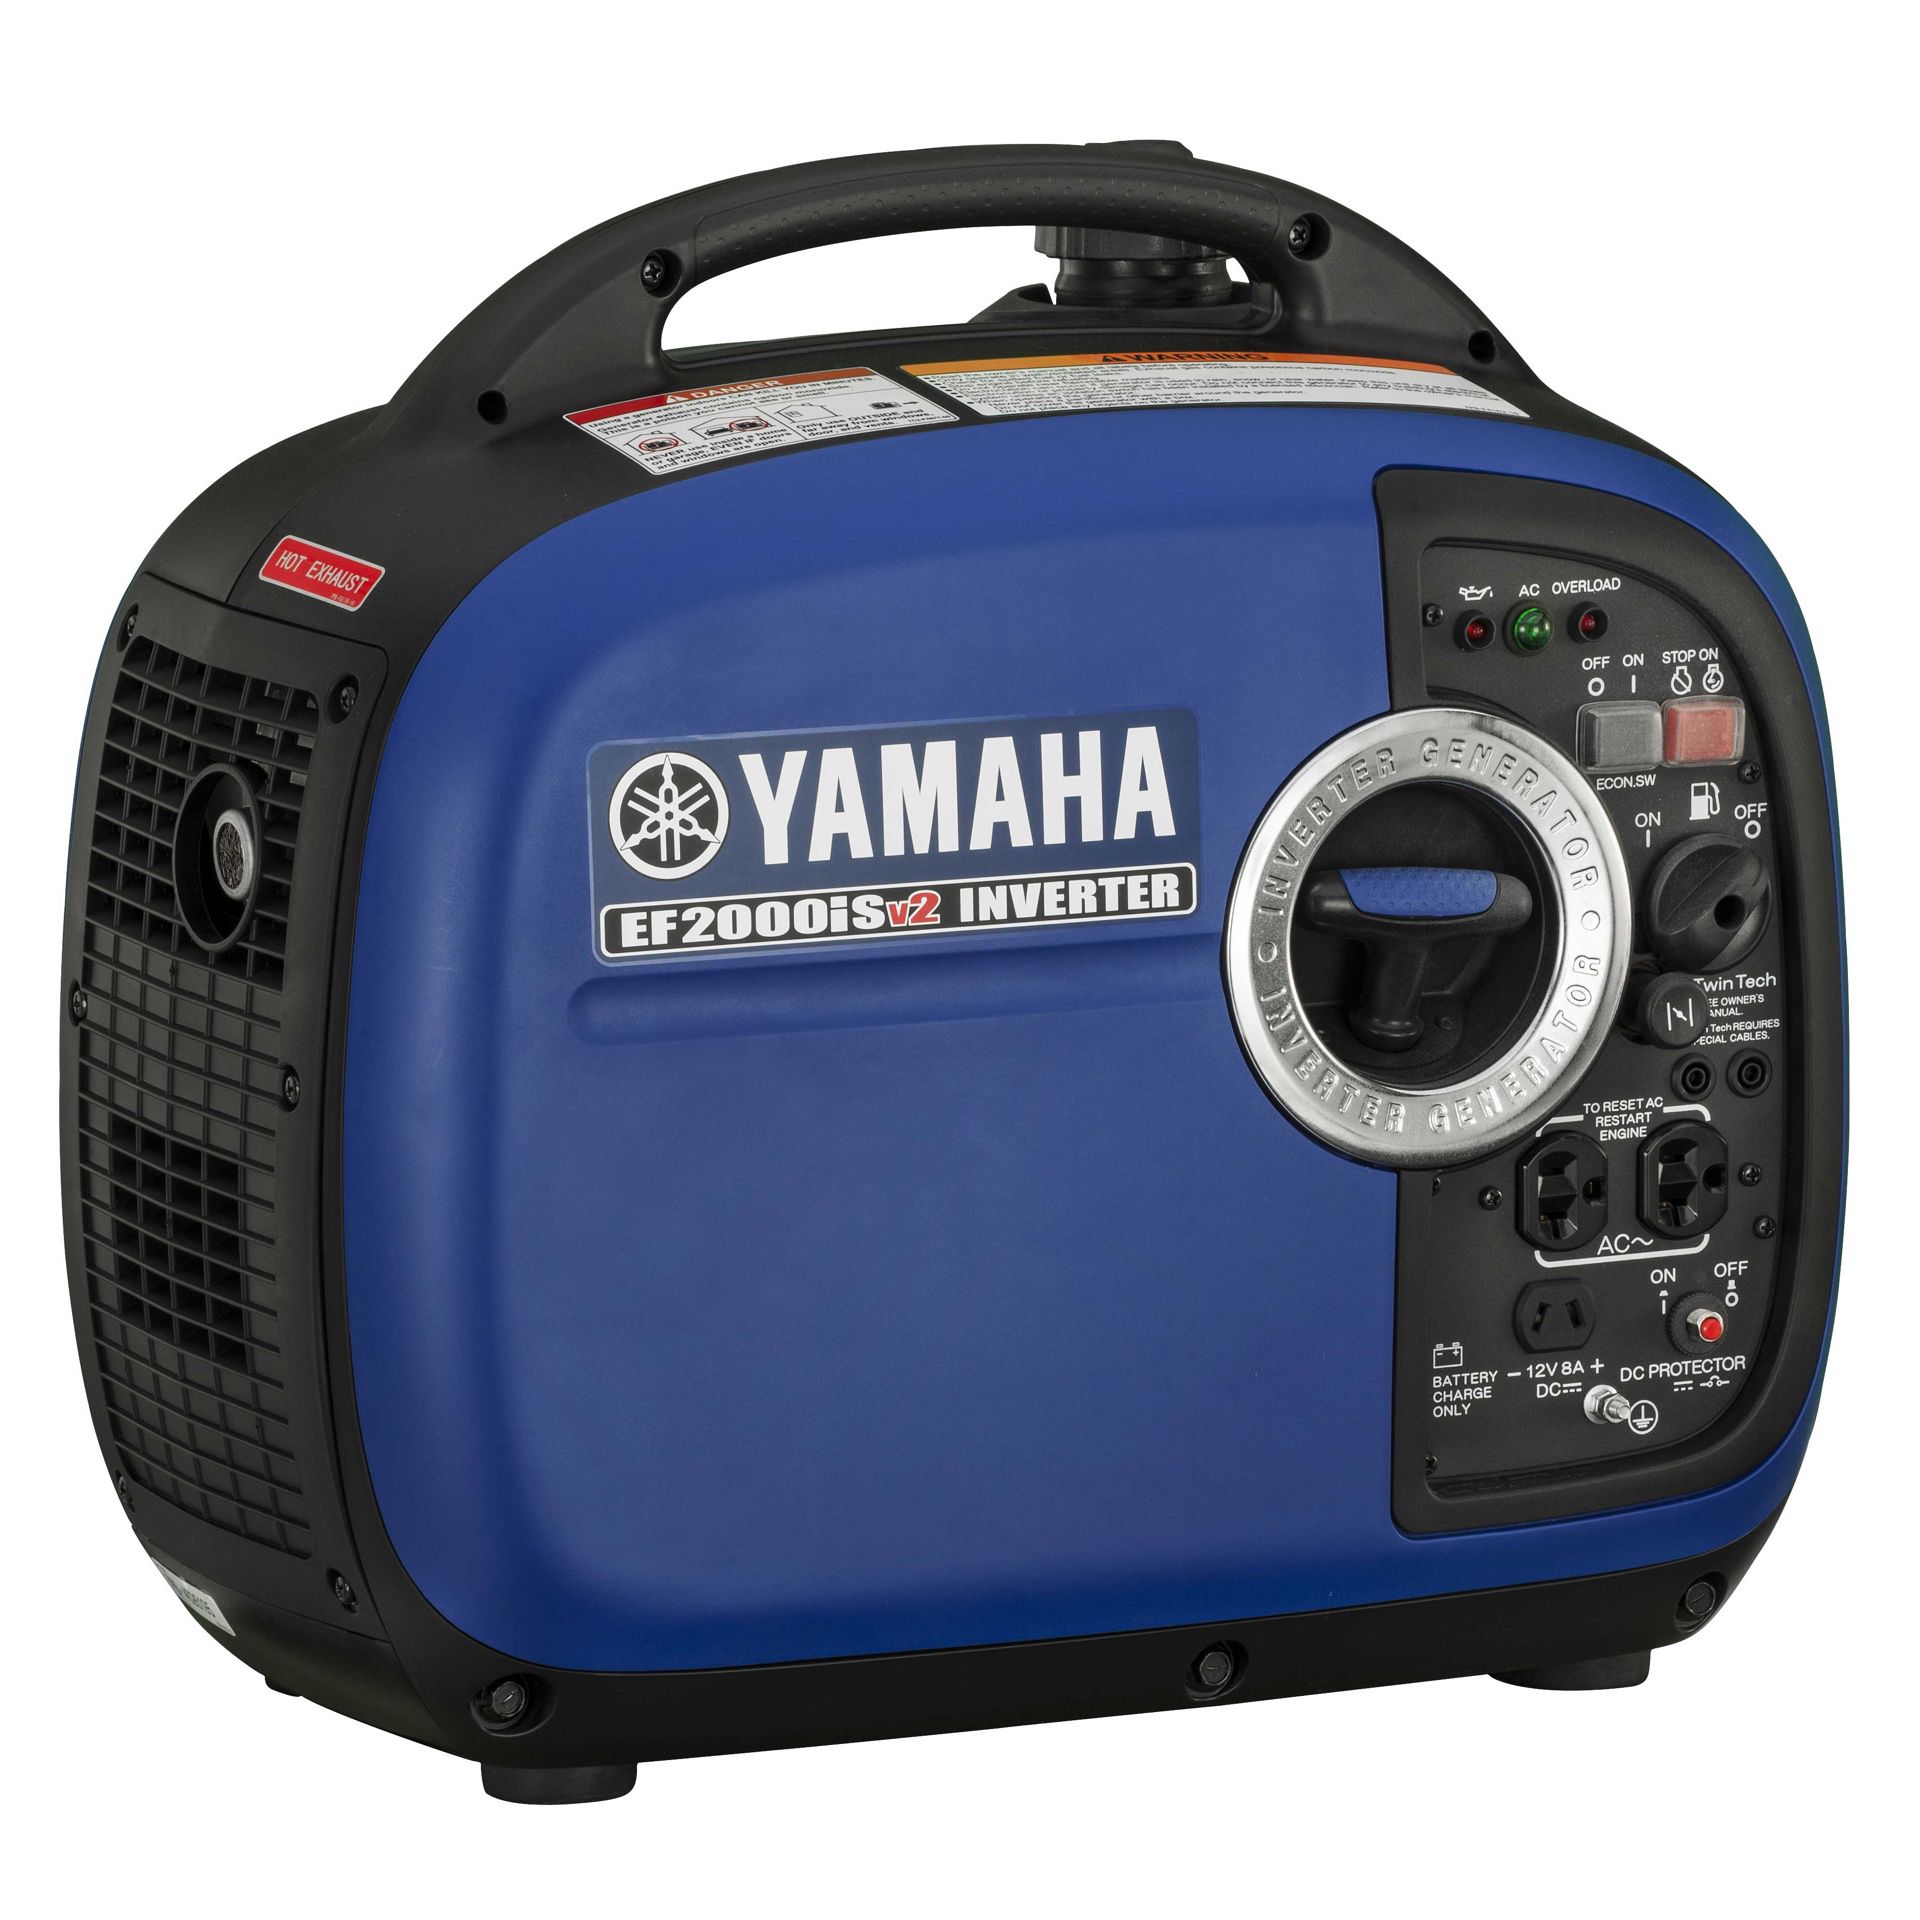 Yamaha ef2000is generator